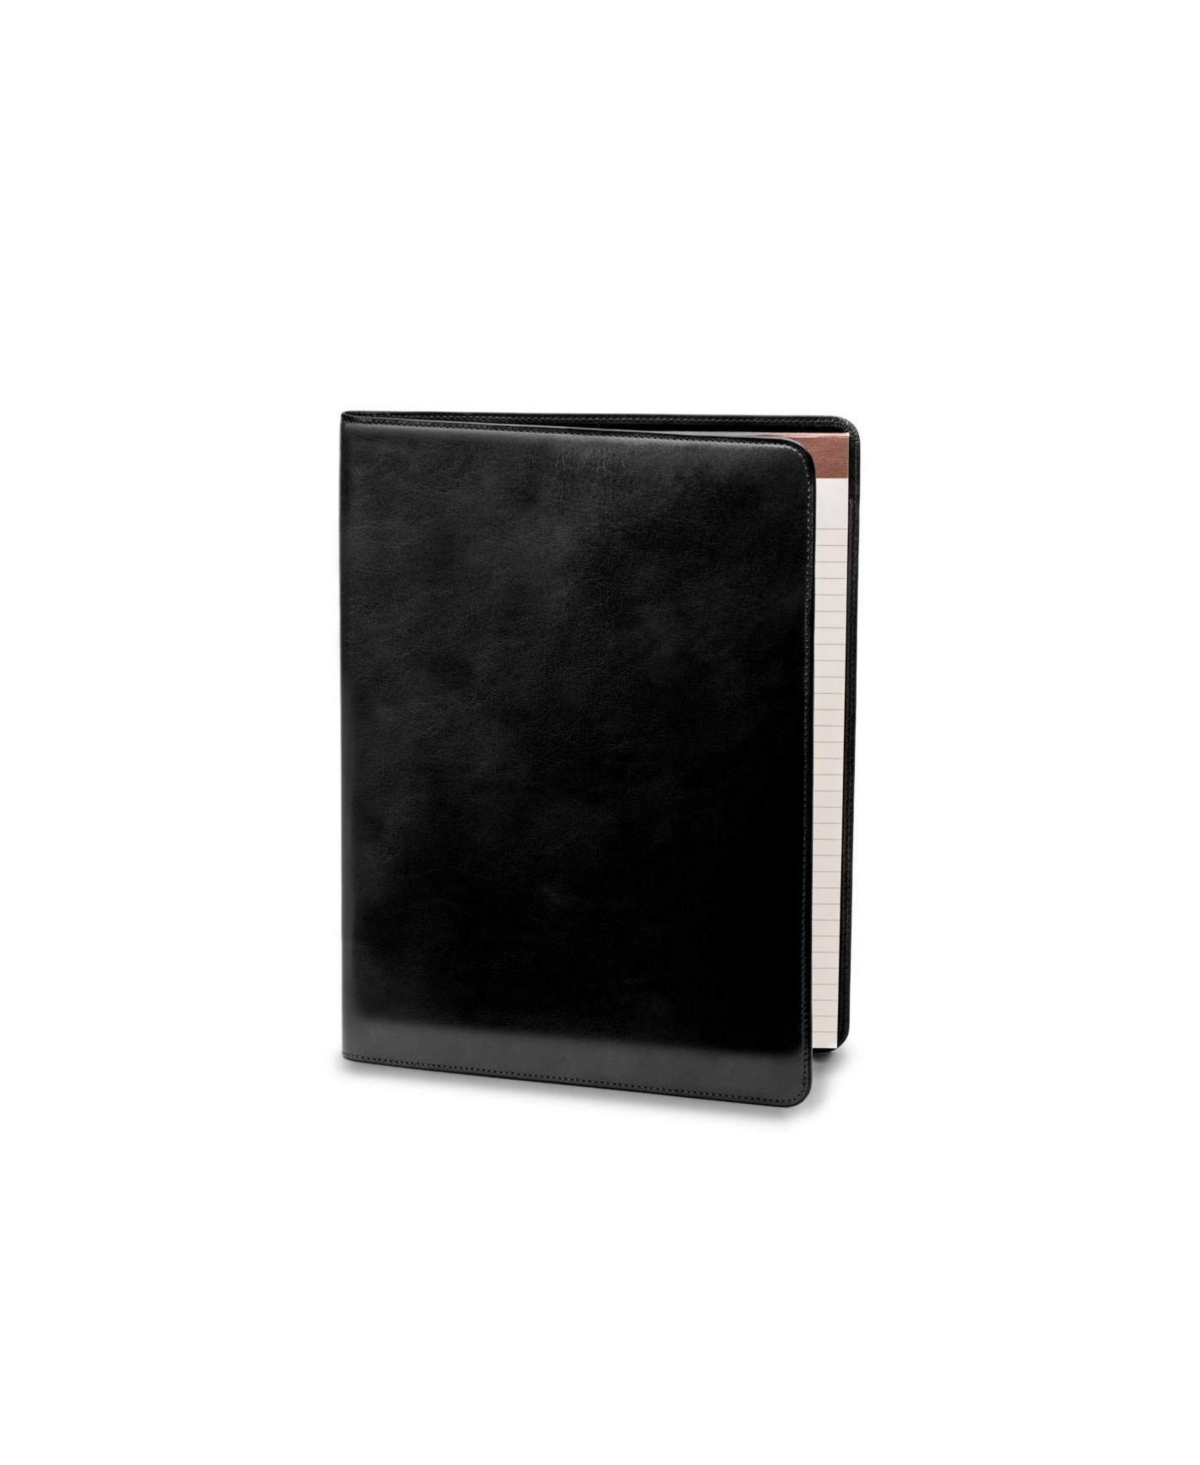 Old Leather 8.5 X 11 Pad Portfolio - Black